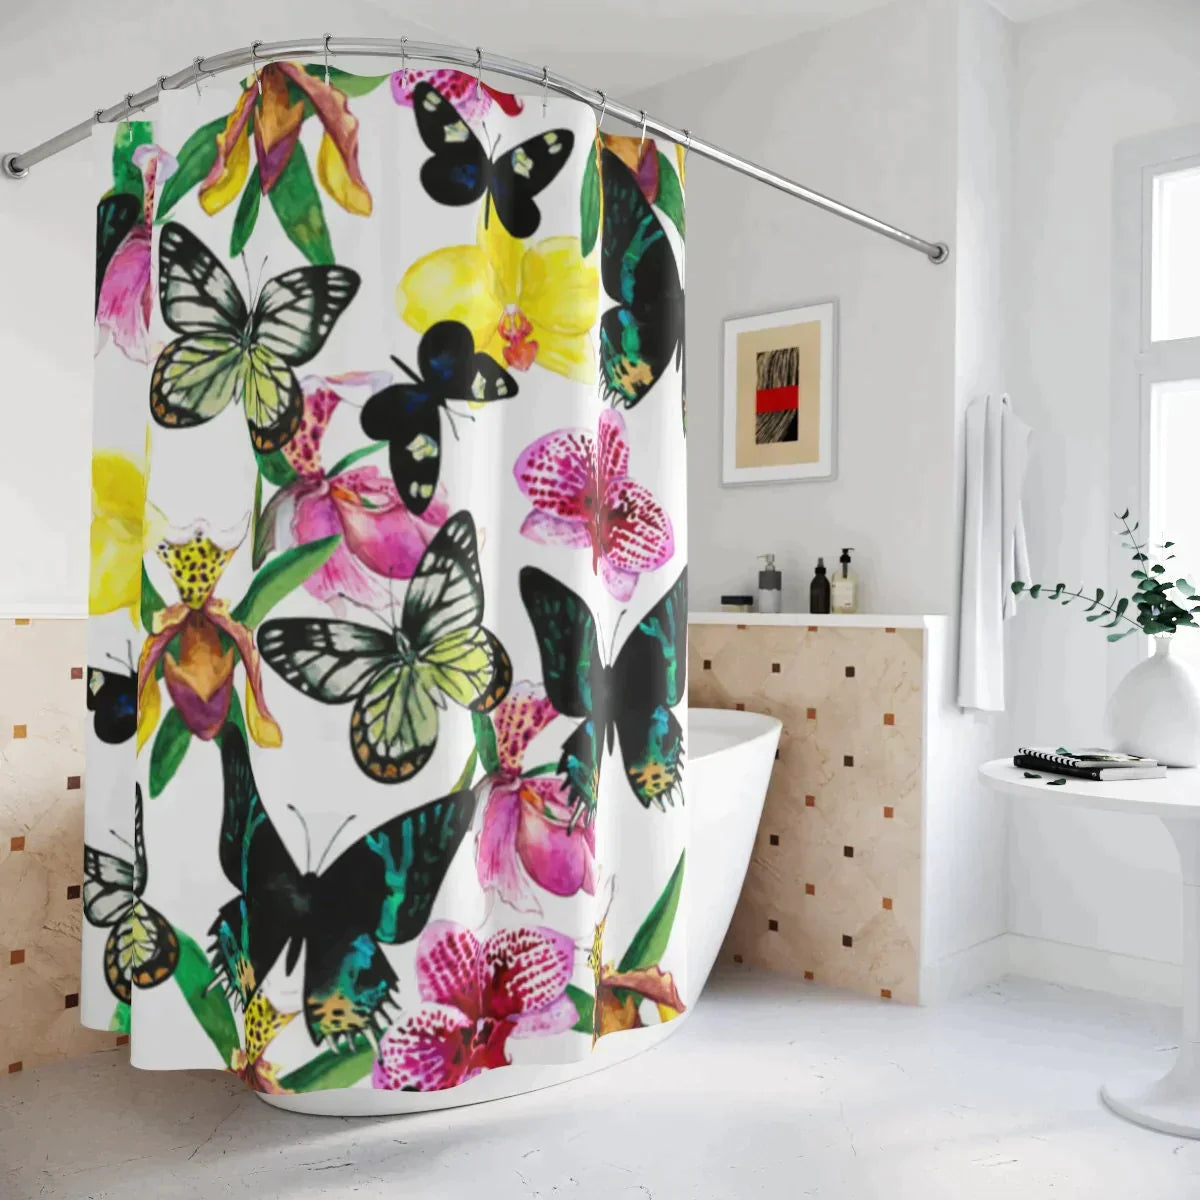 Boho Shower Curtain, Bobo Pink Butterfly Curtain, Cool Cute Bathroom Accessories, Housewarming Gift, Hippie Decor, Extra Long Shower Curtain